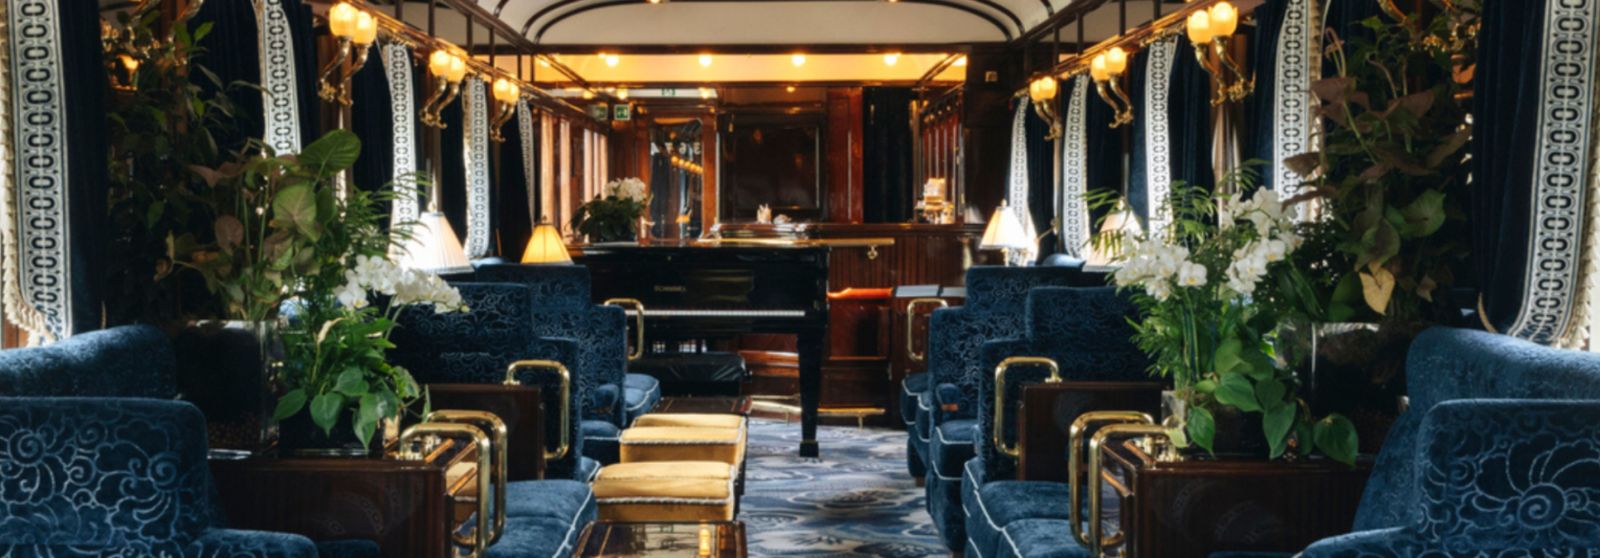 Inside the Venice Simplon-Orient Express, a luxurious winter train ride